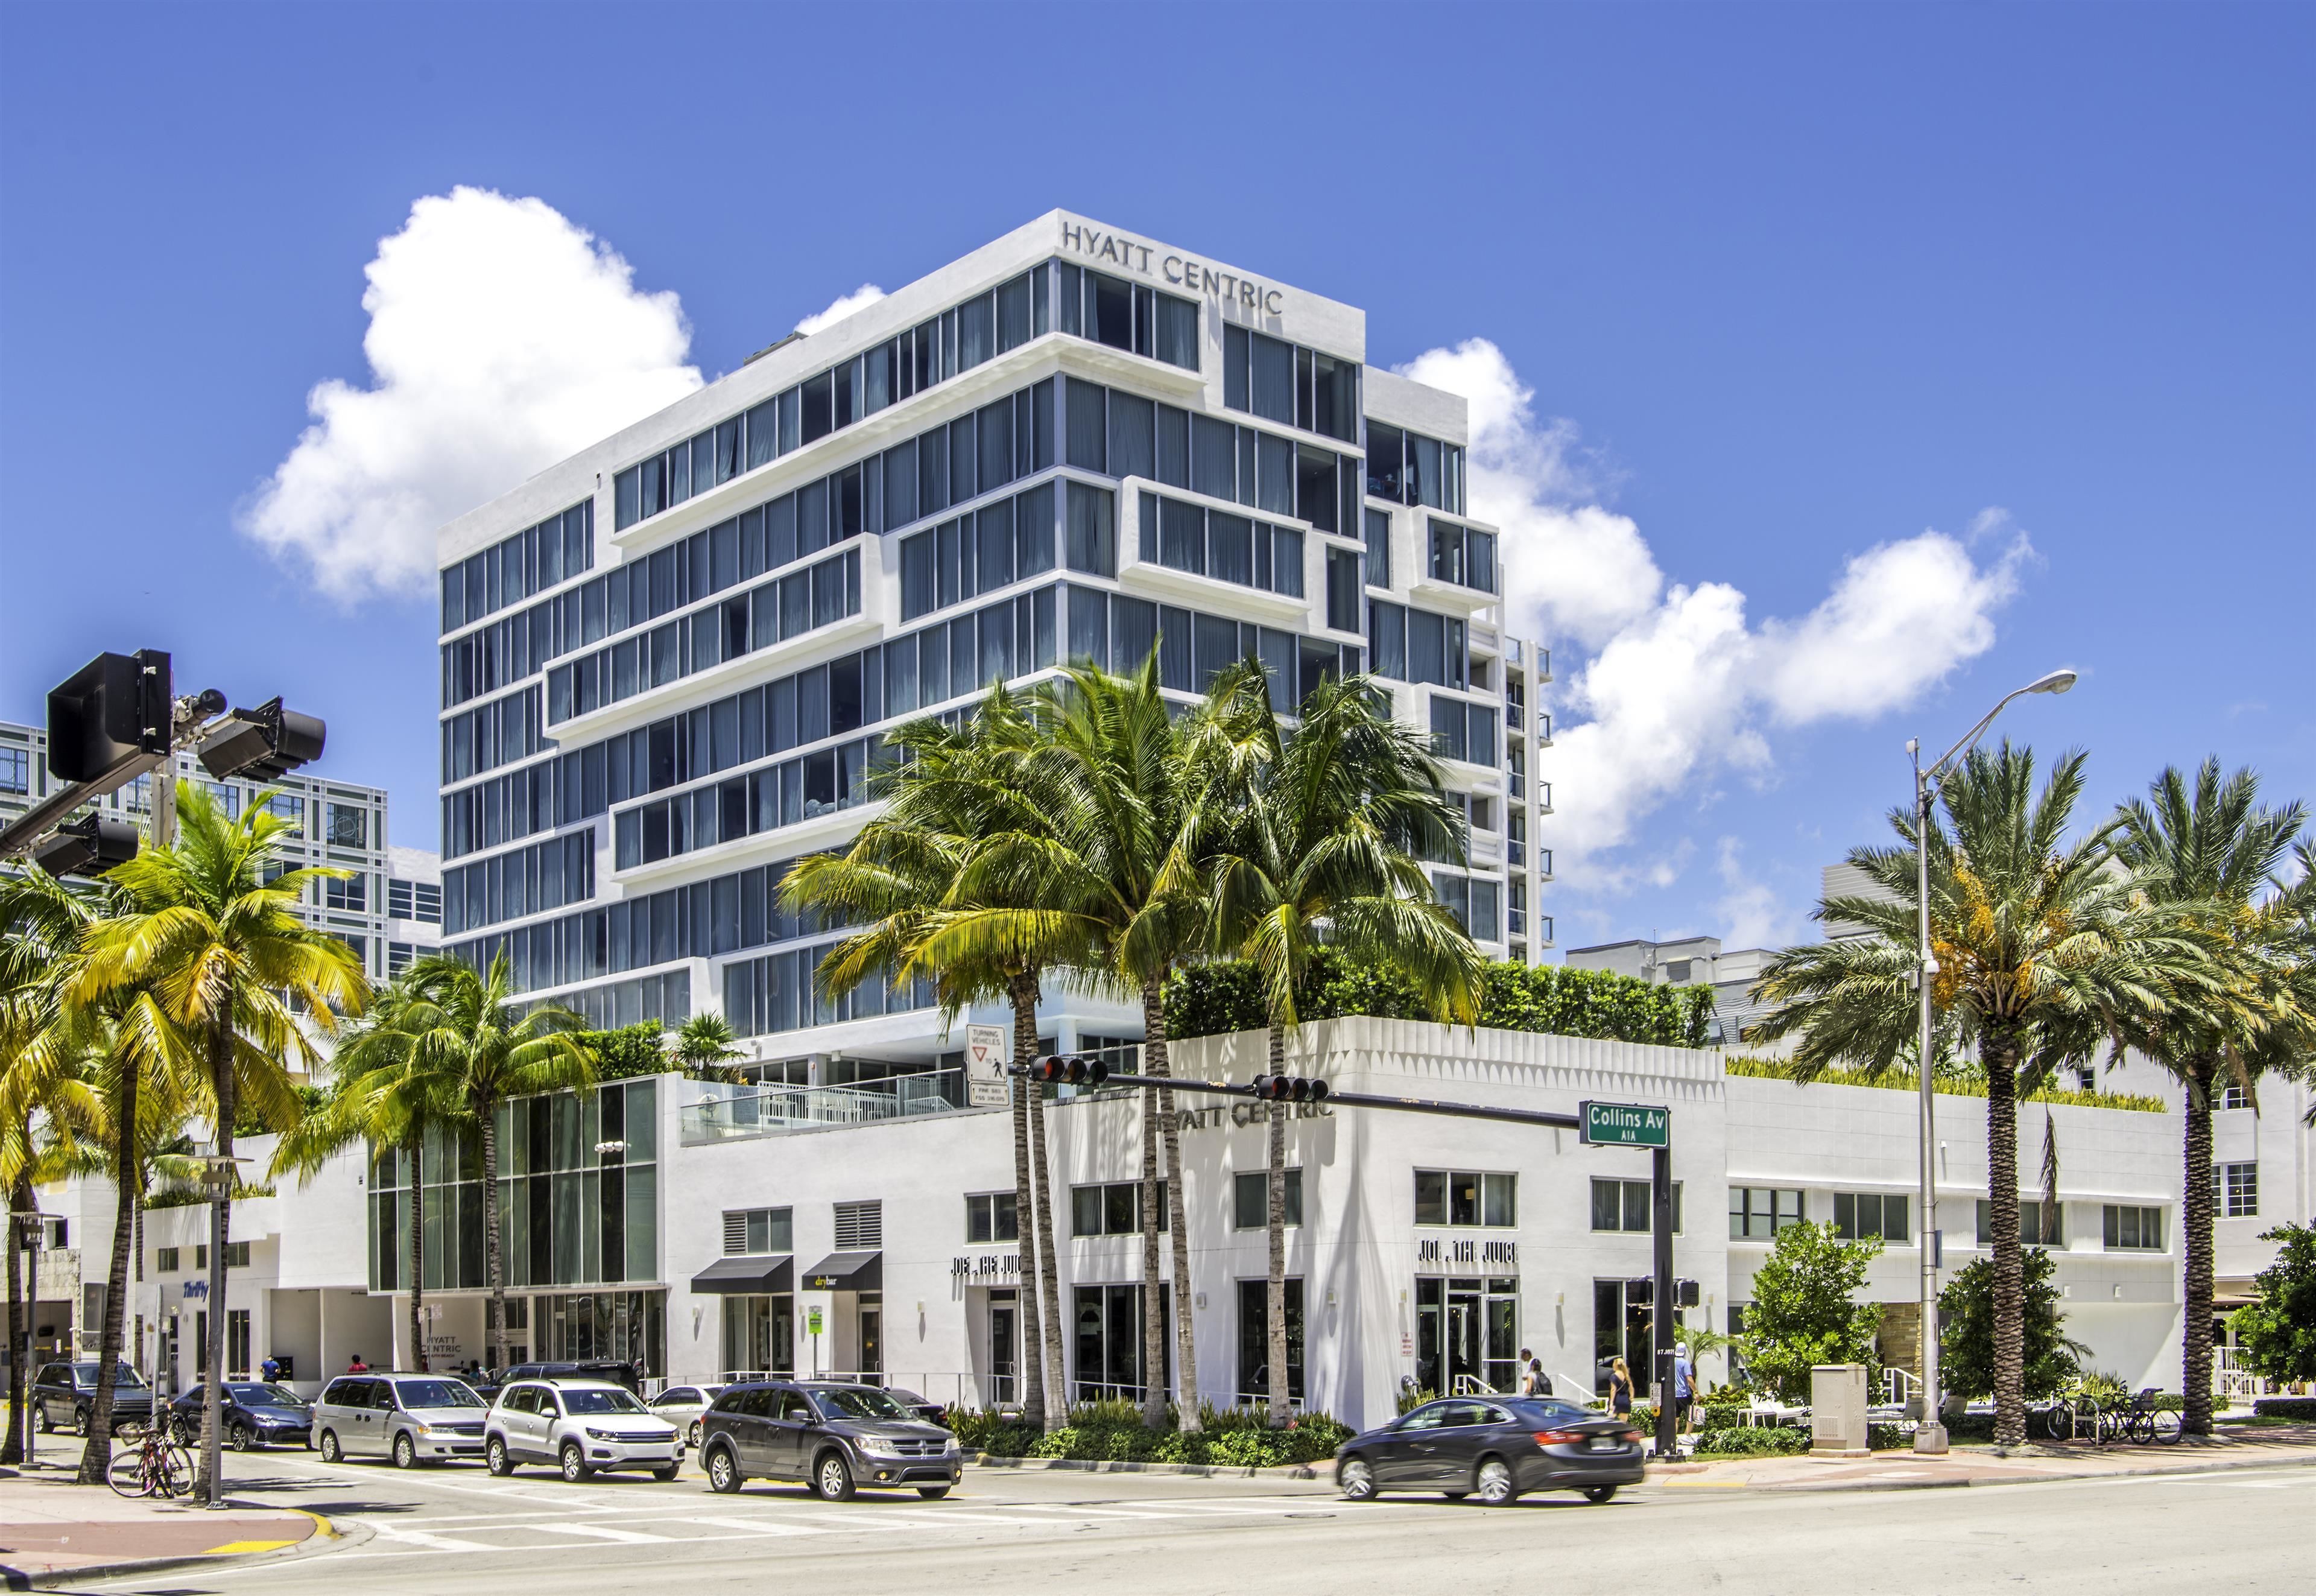 Hyatt Centric South Beach Miami image 1